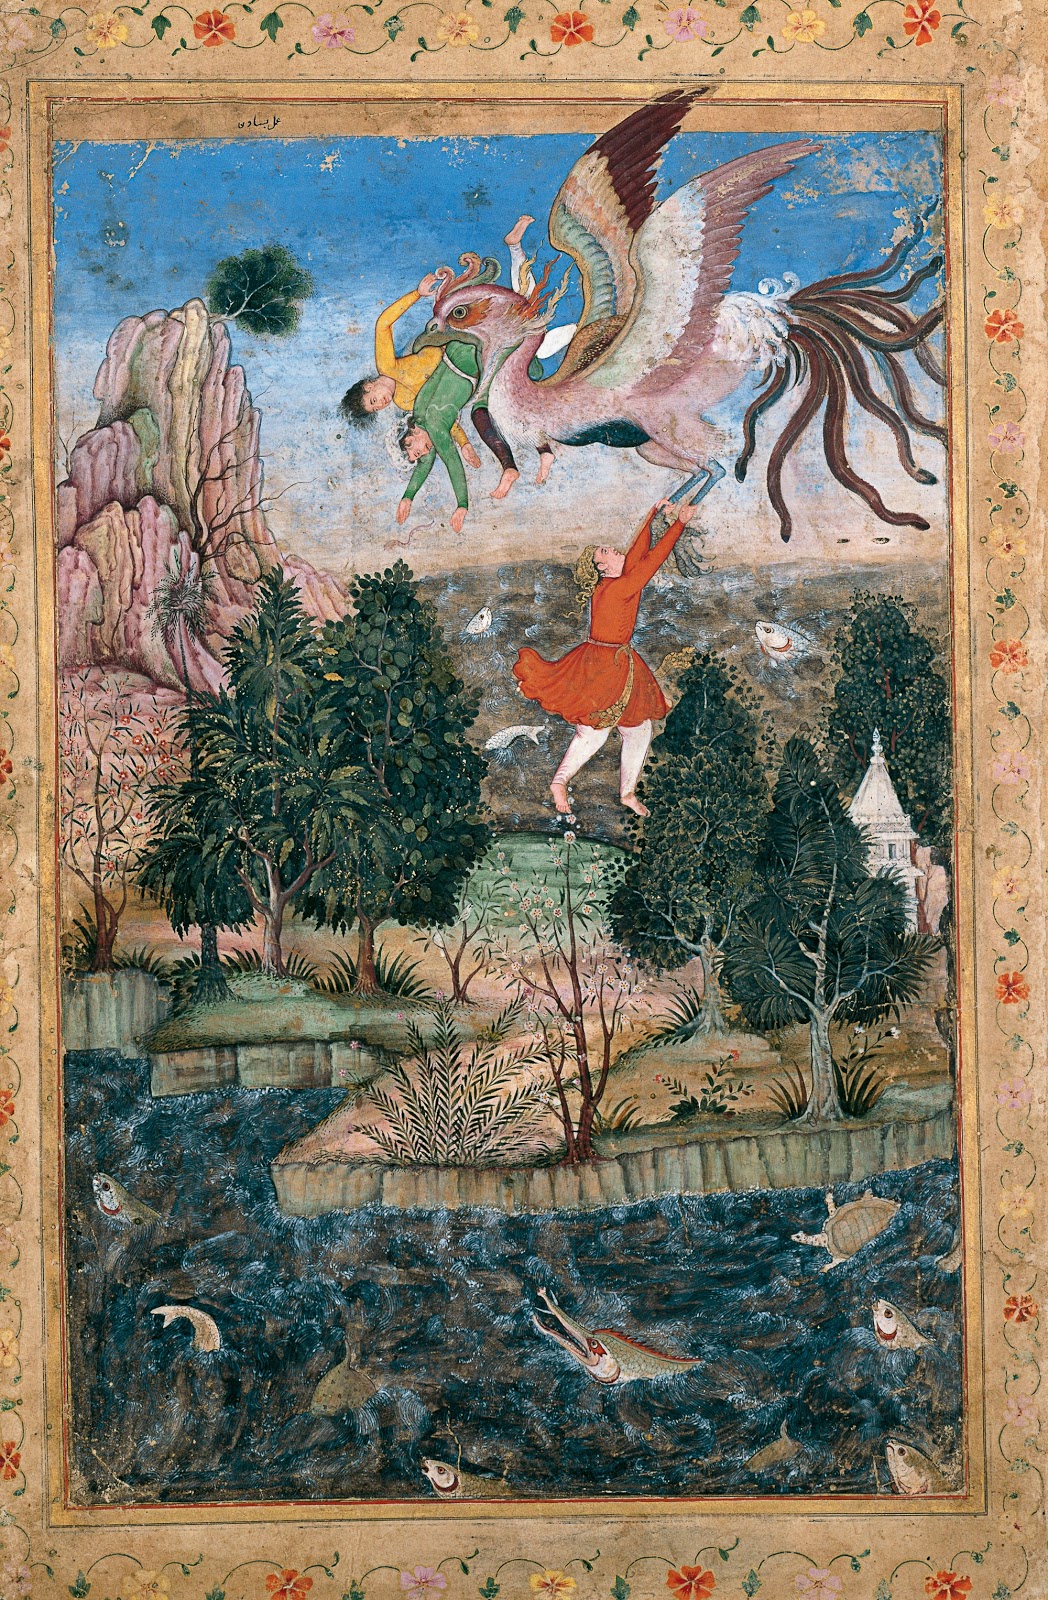 Simurgh, the fabulous bird of Persian mythology